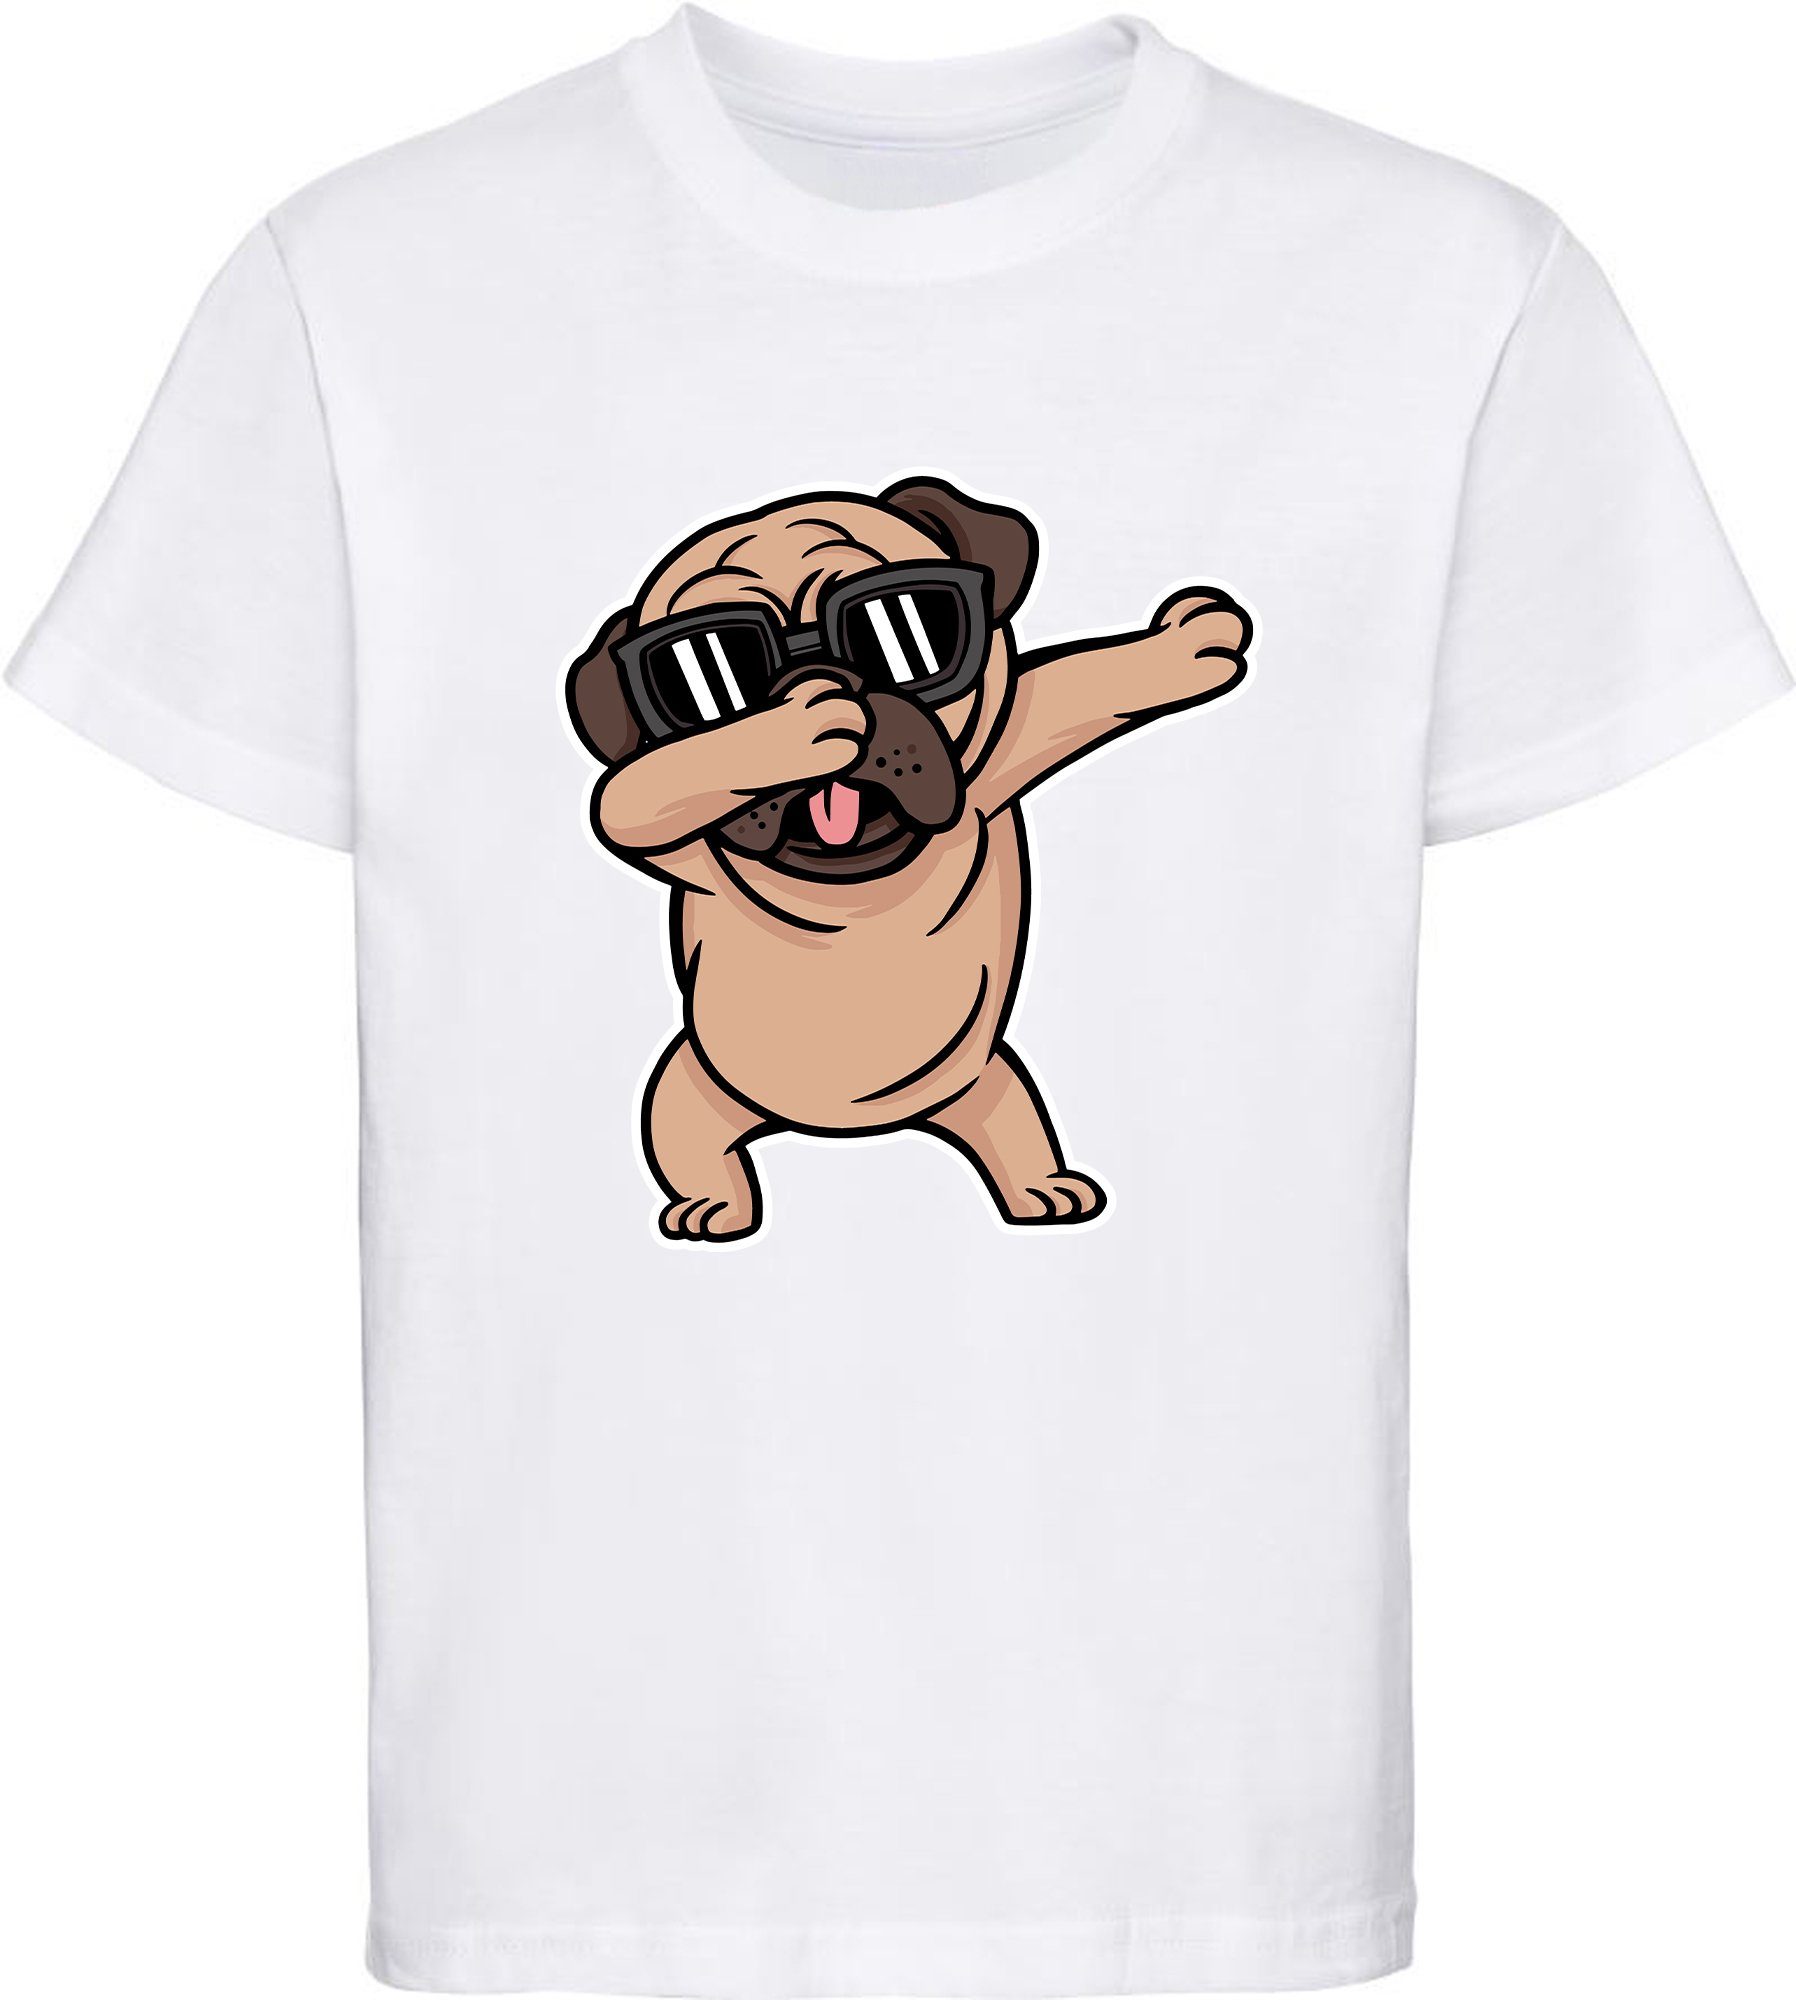 MyDesign24 Print-Shirt Kinder Hunde T-Shirt bedruckt - Cooler Hund mit Skateboard Baumwollshirt mit Aufdruck, i239 weiss | T-Shirts